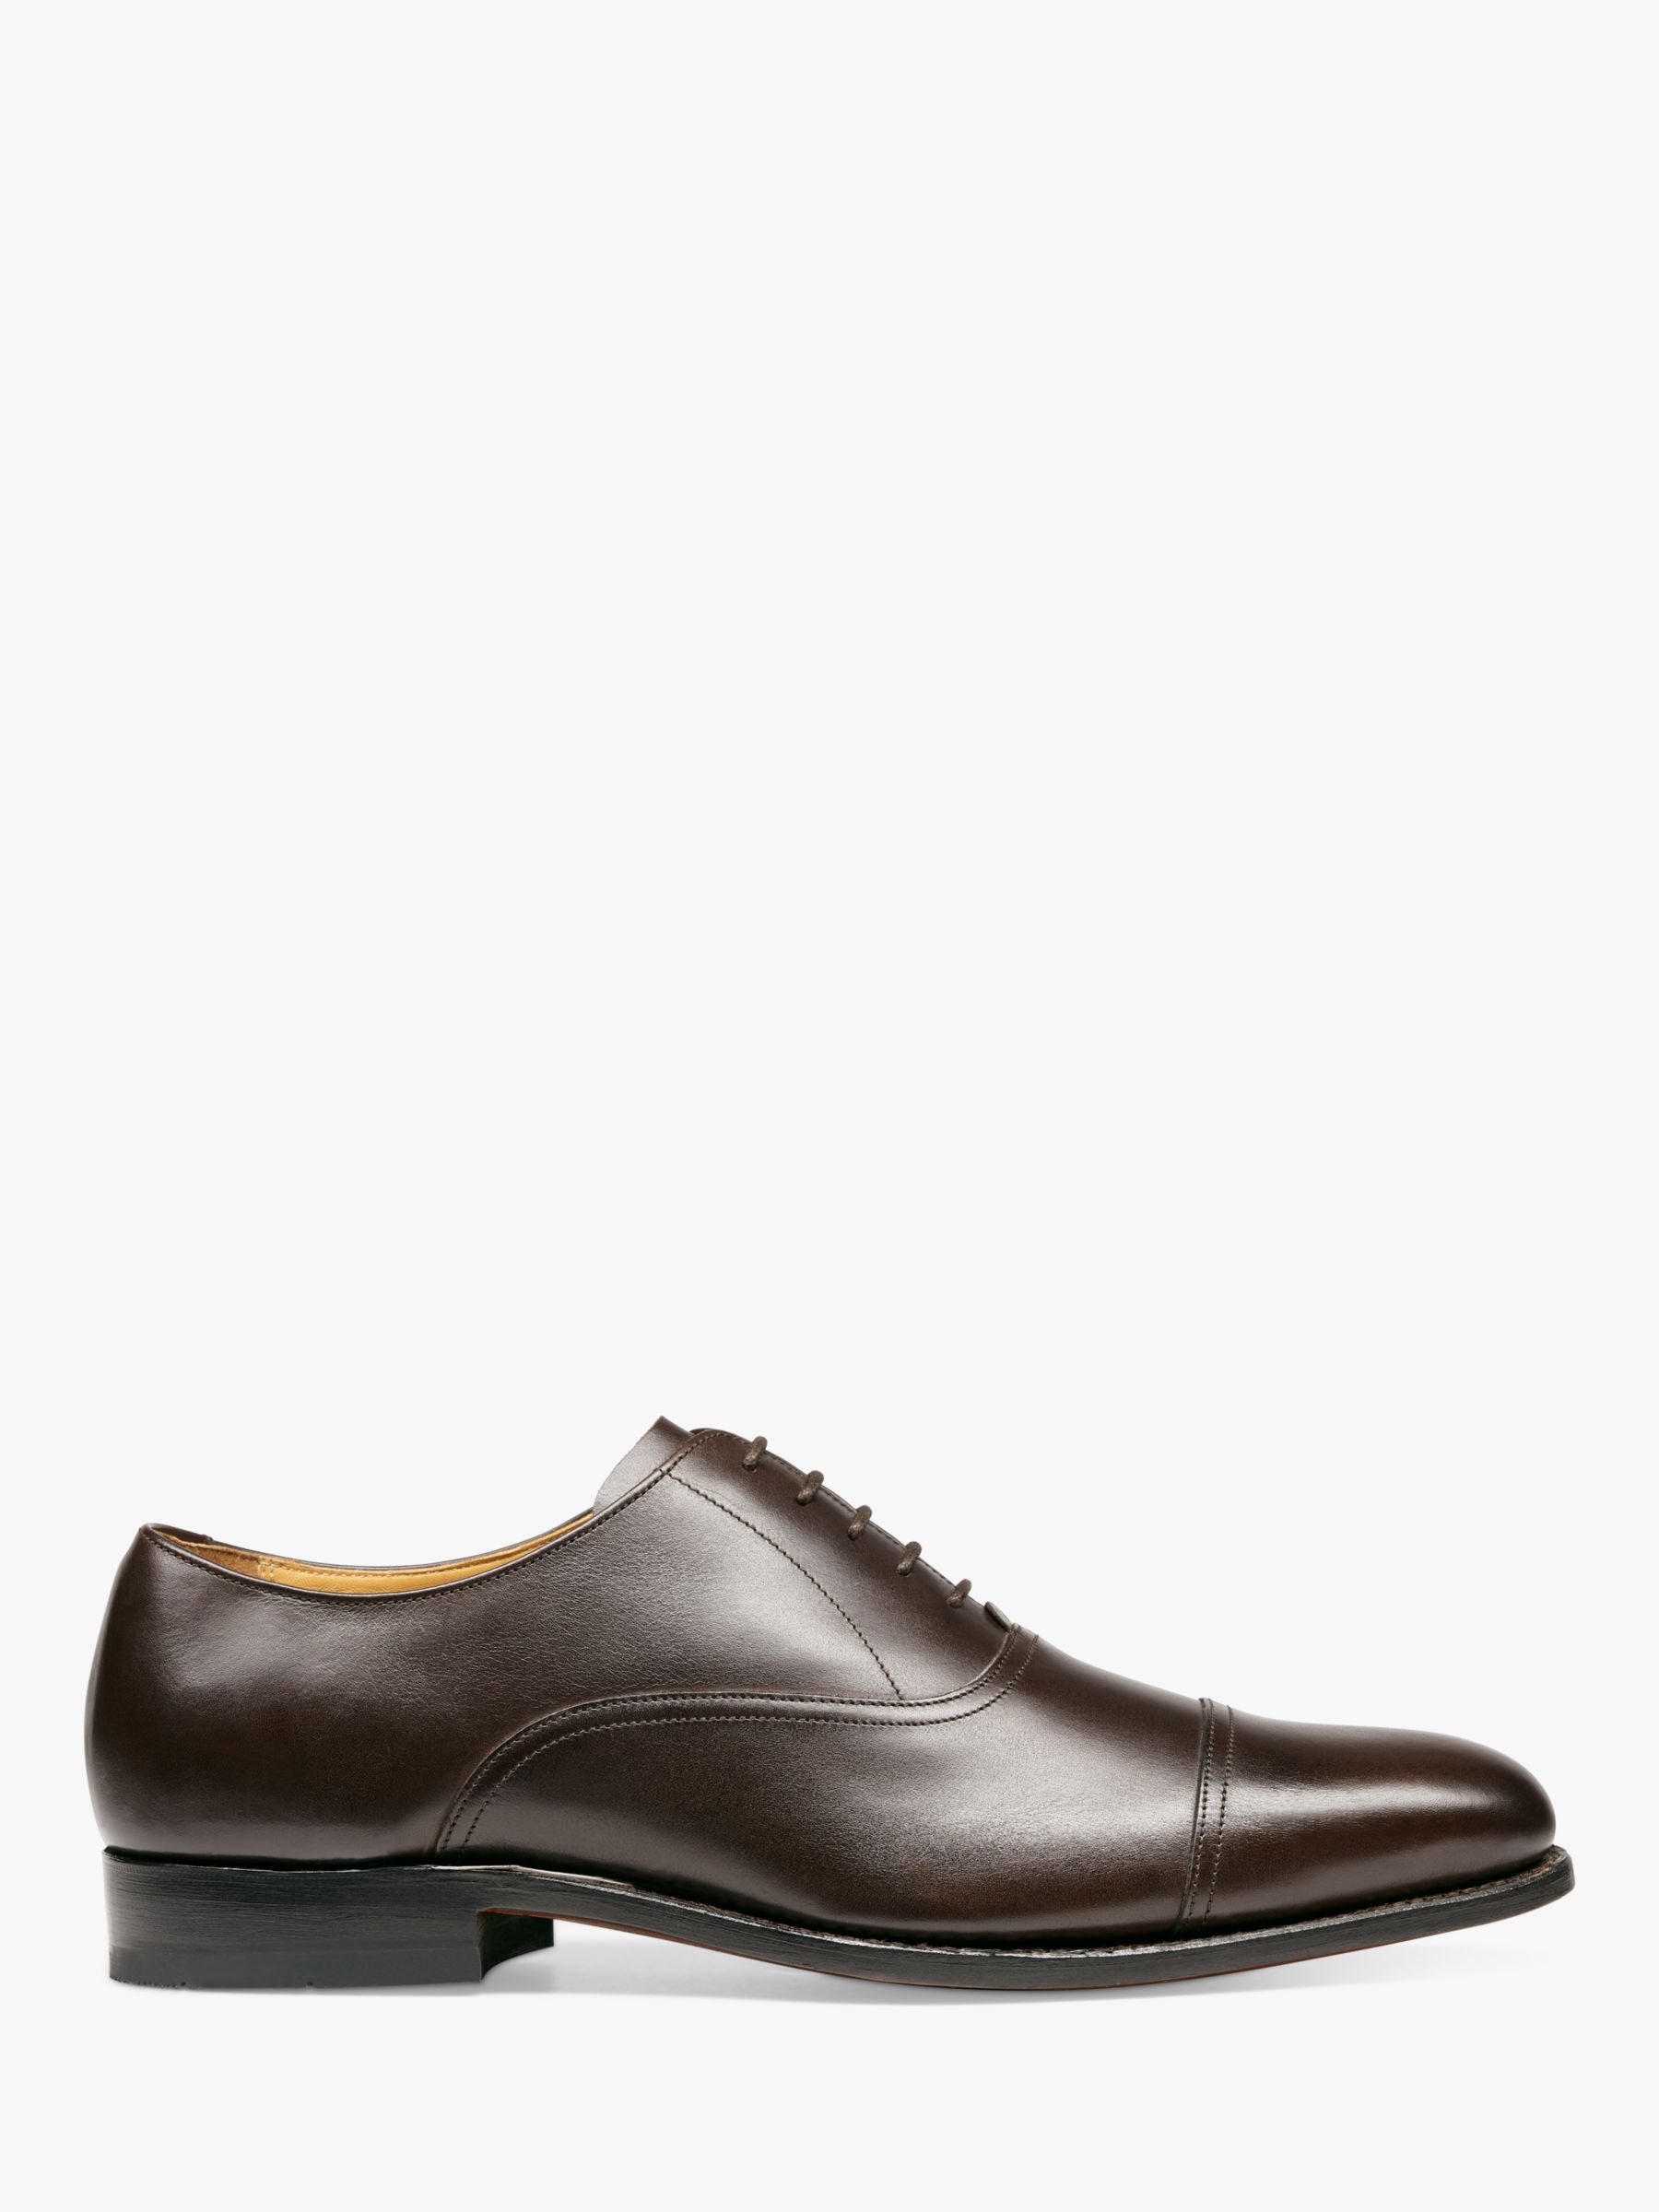 Charles Tyrwhitt Leather Oxford Shoes, Dark Chocolate at John Lewis ...